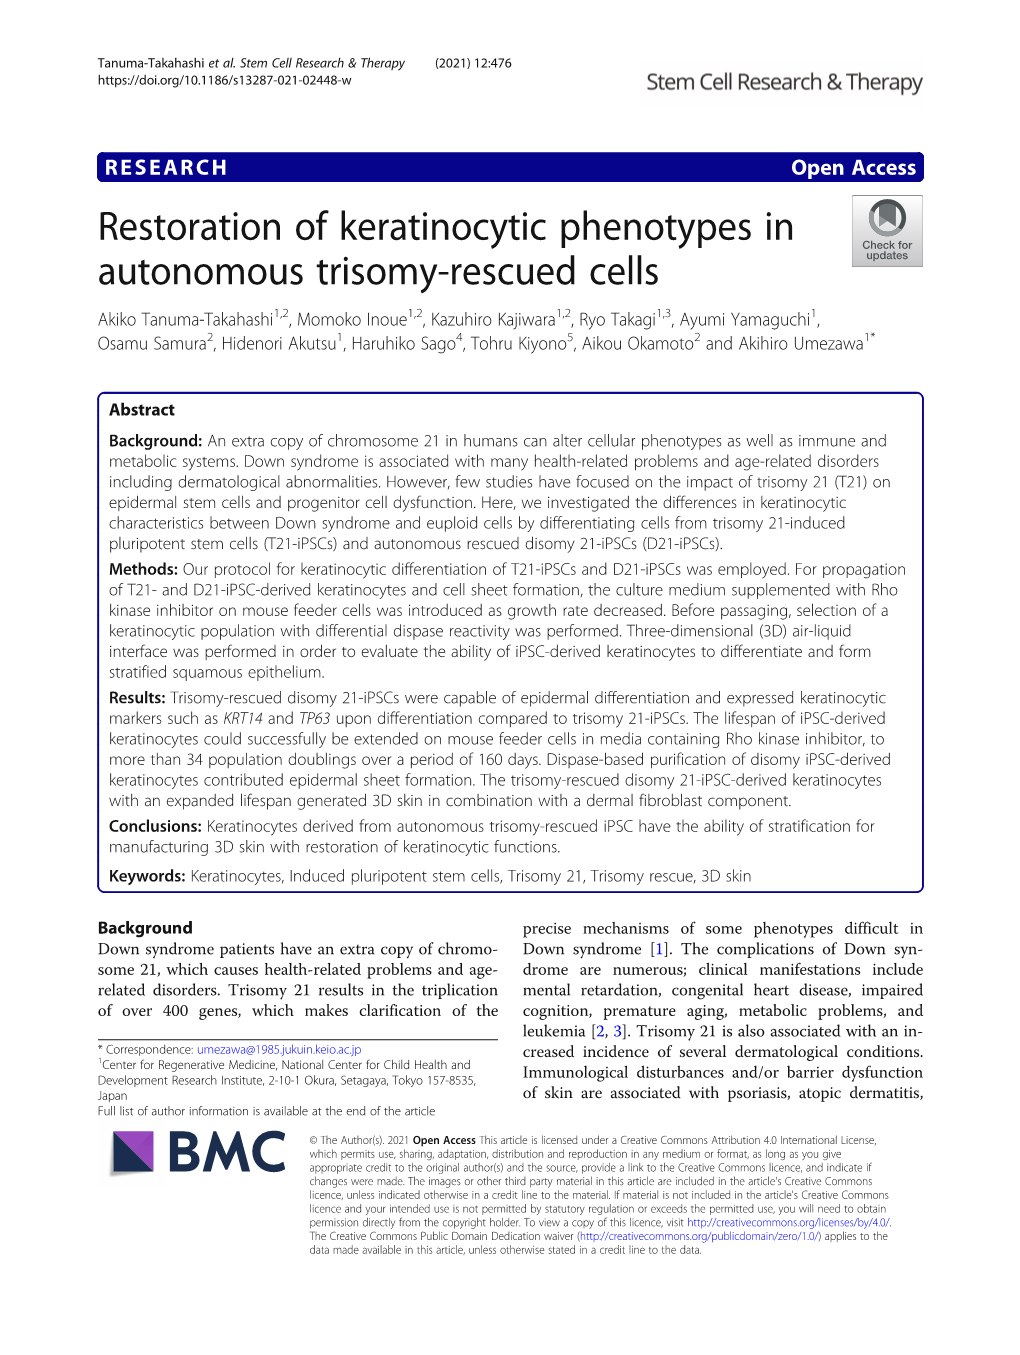 Restoration of Keratinocytic Phenotypes in Autonomous Trisomy